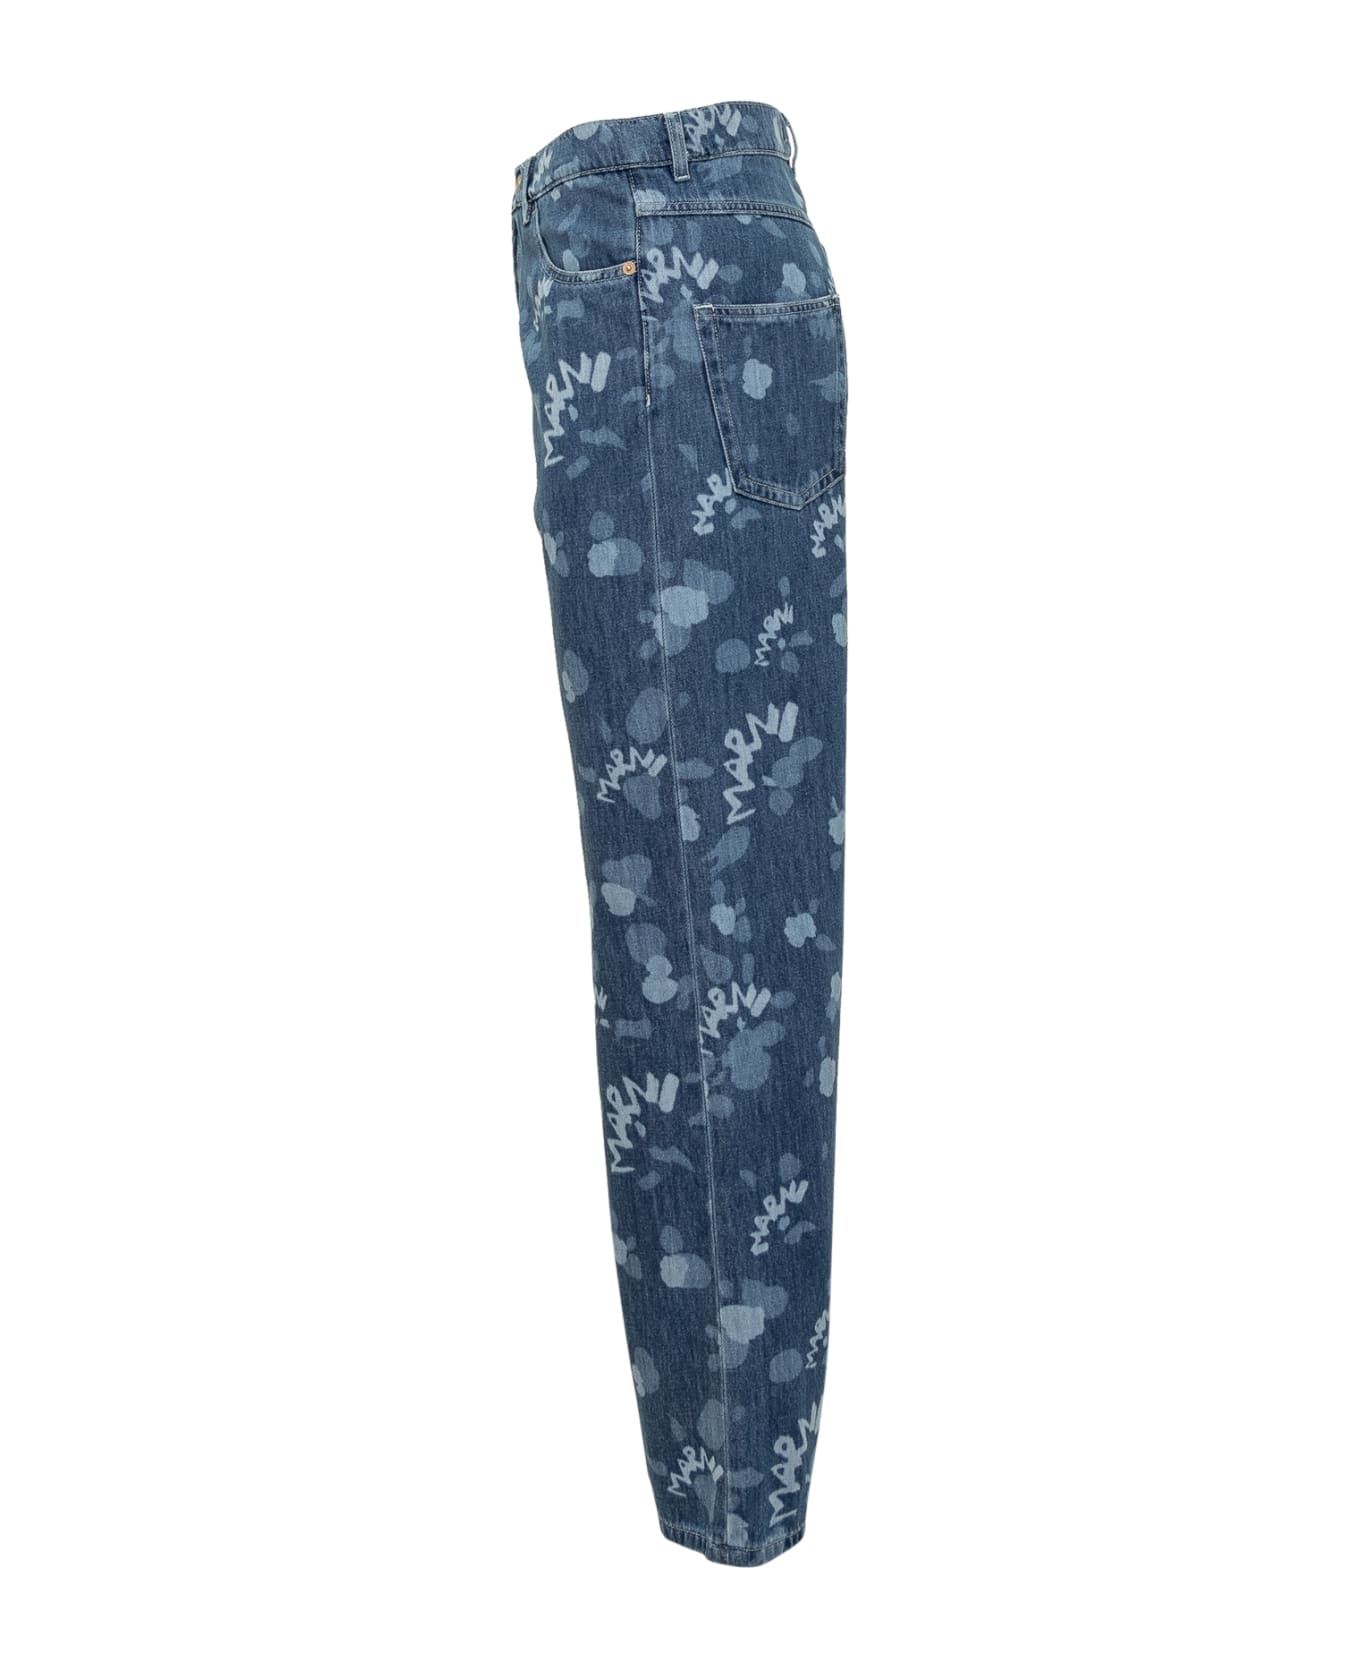 Marni Jeans With Marni Dripping Print - IRIS BLUE デニム